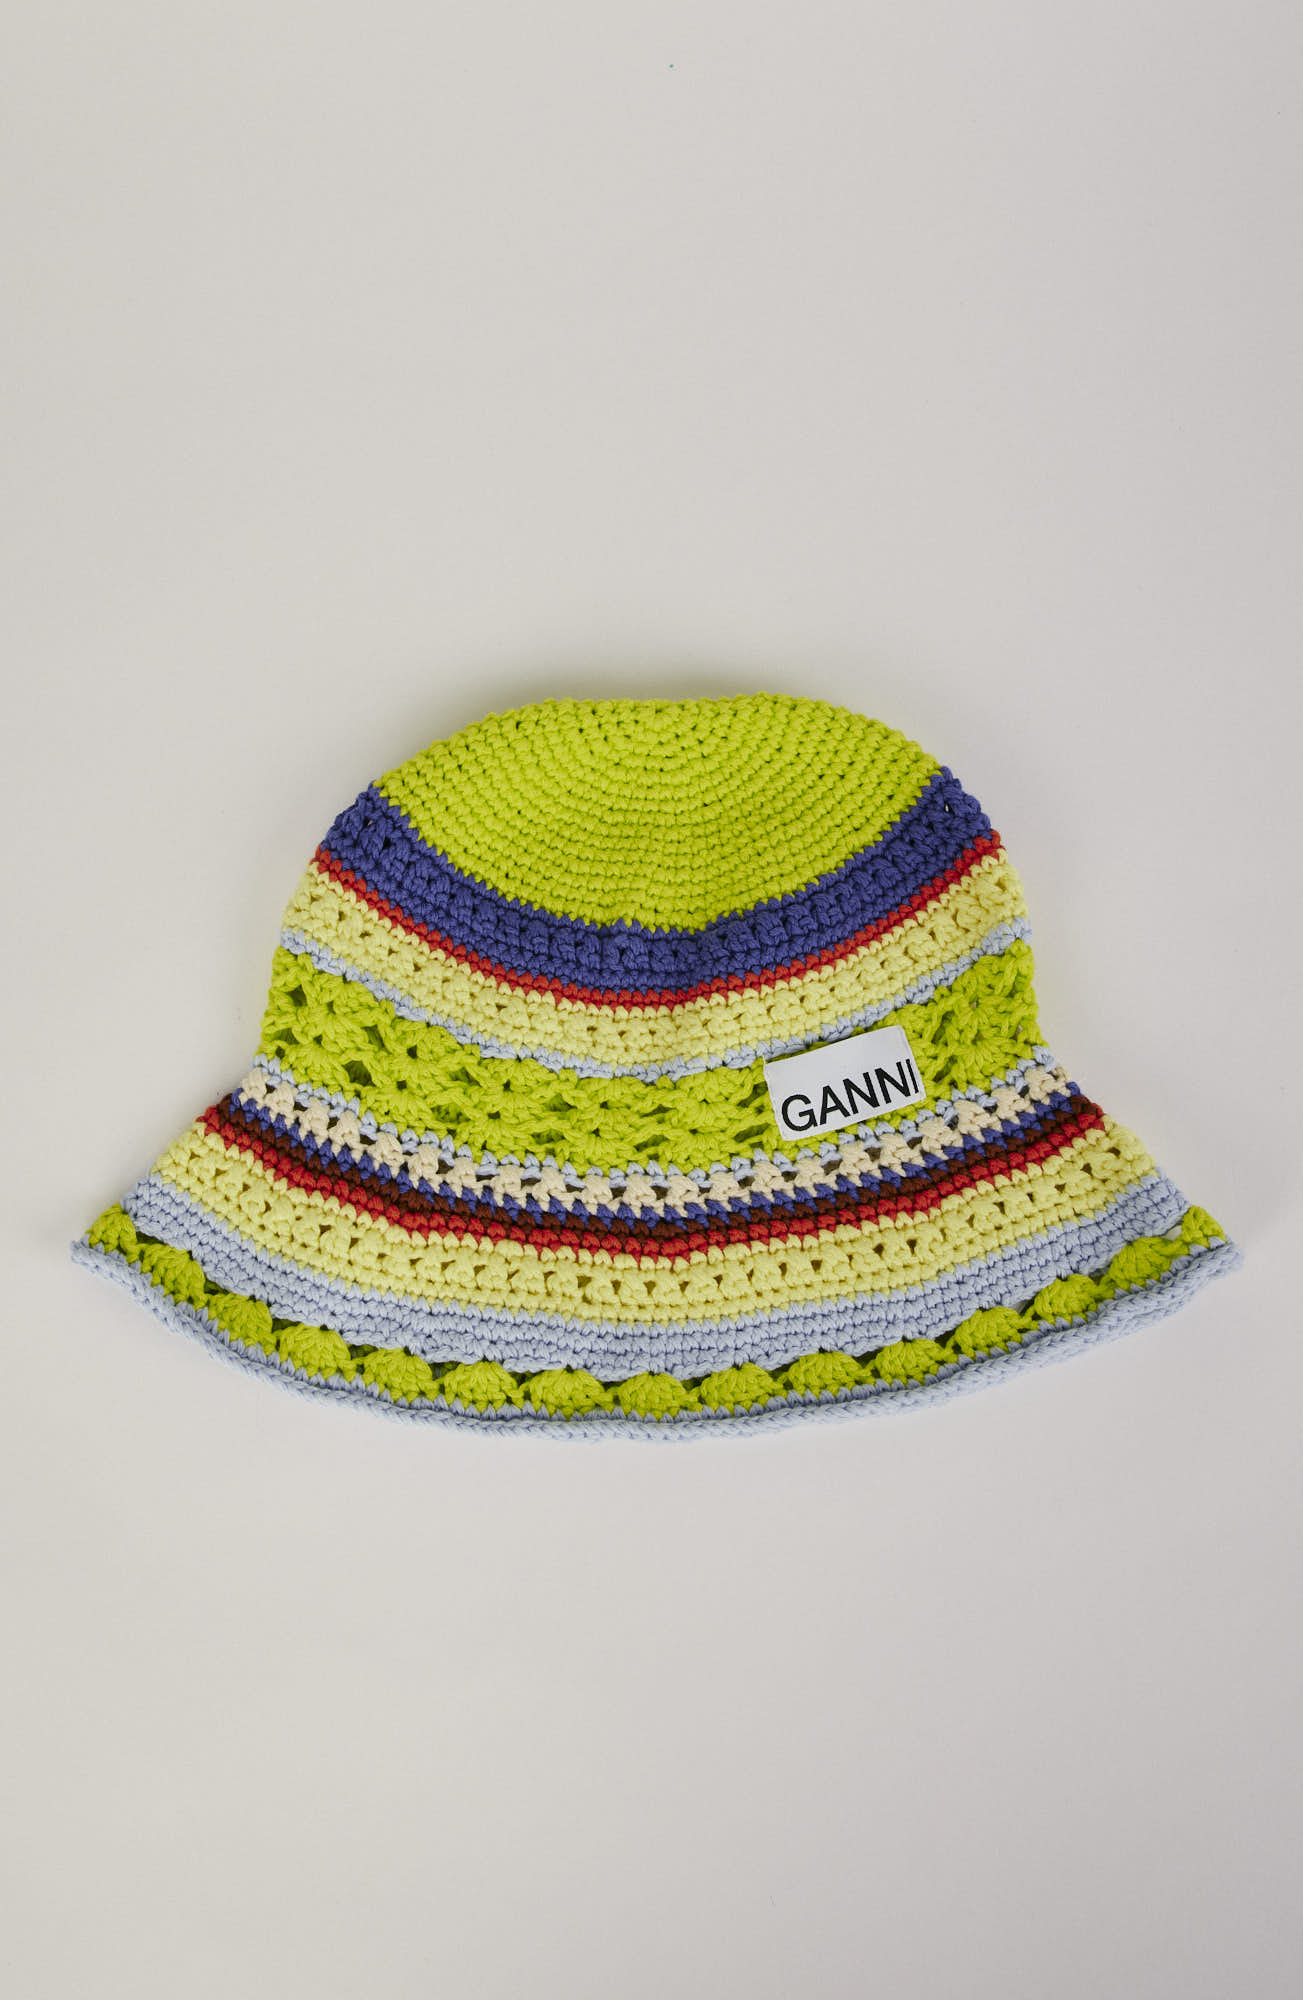 Ganni - Crochet Bucket Hat in yellow/multicolor - Schwittenberg